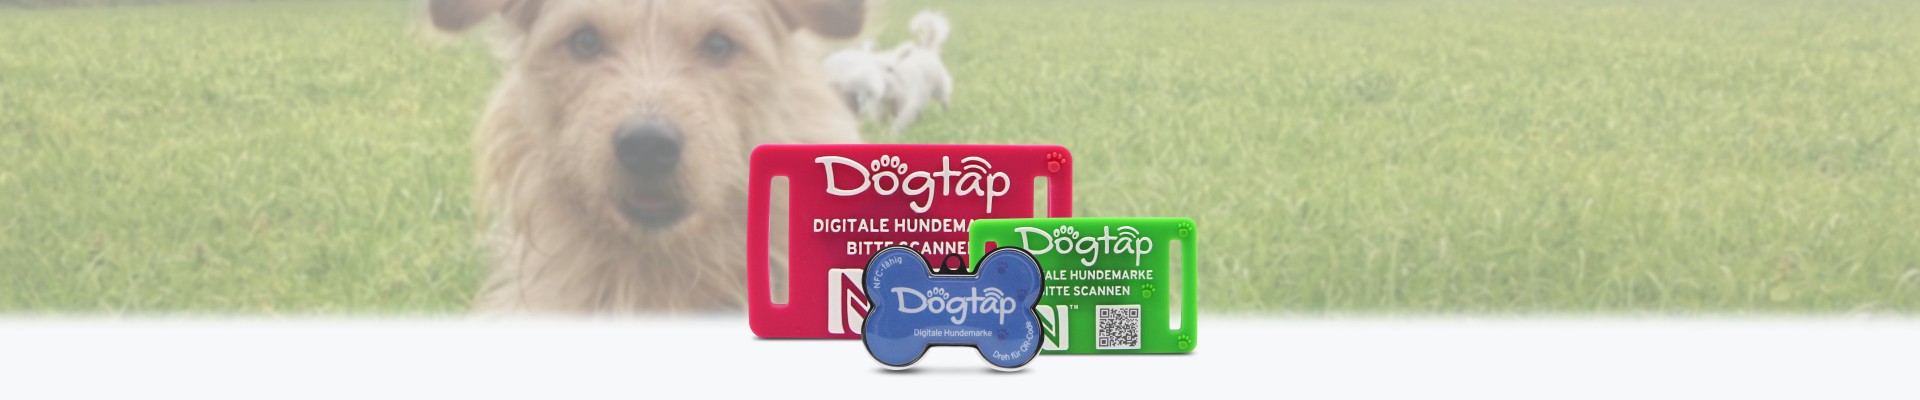 Dogtap - die digitale Hundemarke